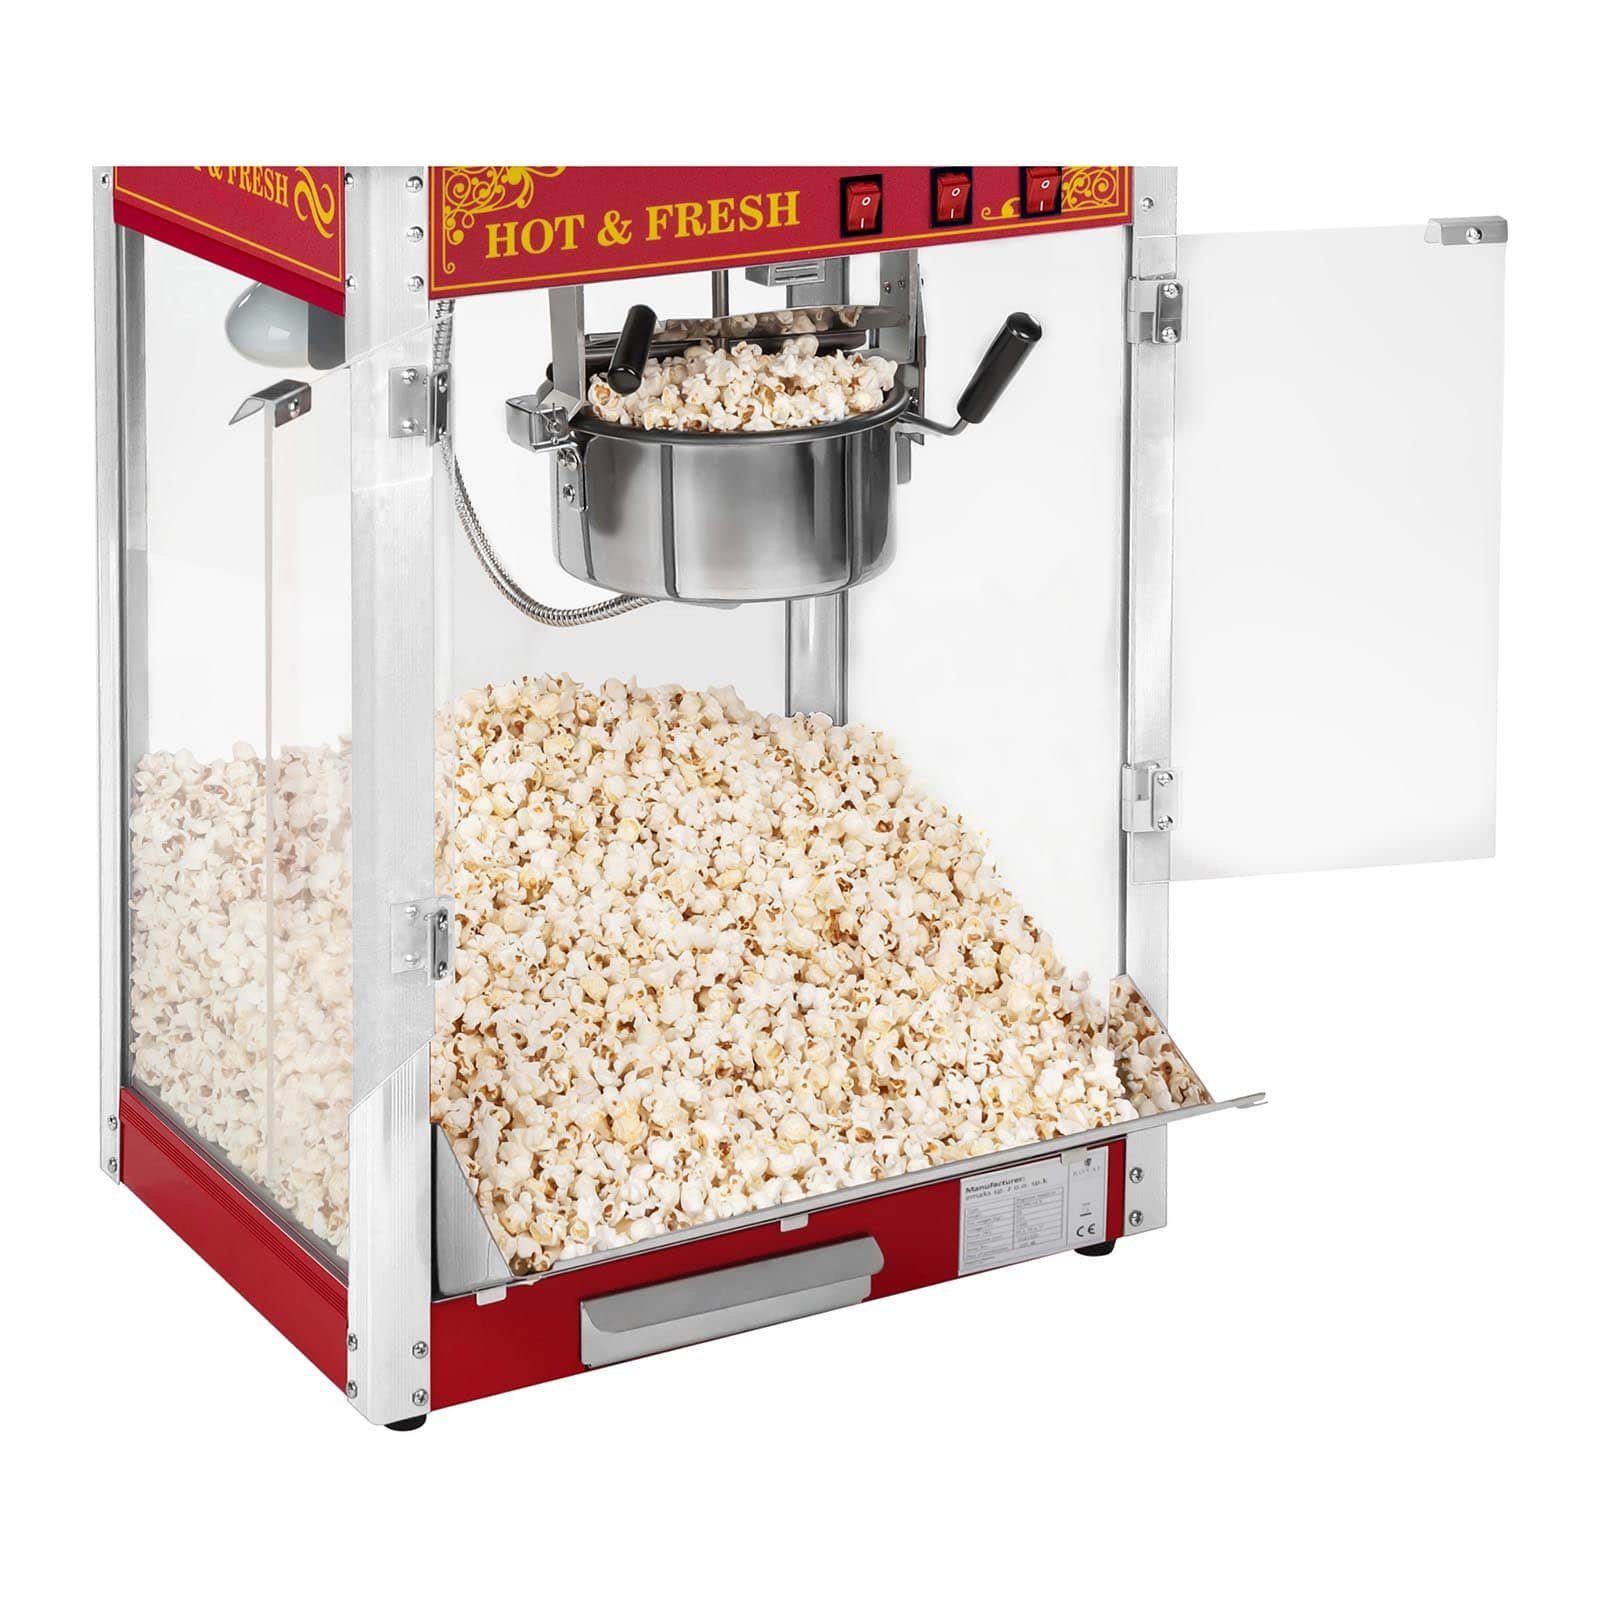 Retro Popcornmaschine Popcornmaker 5kg/h 1500W Catering Popcornmaschine Profi Popcornautomat Royal